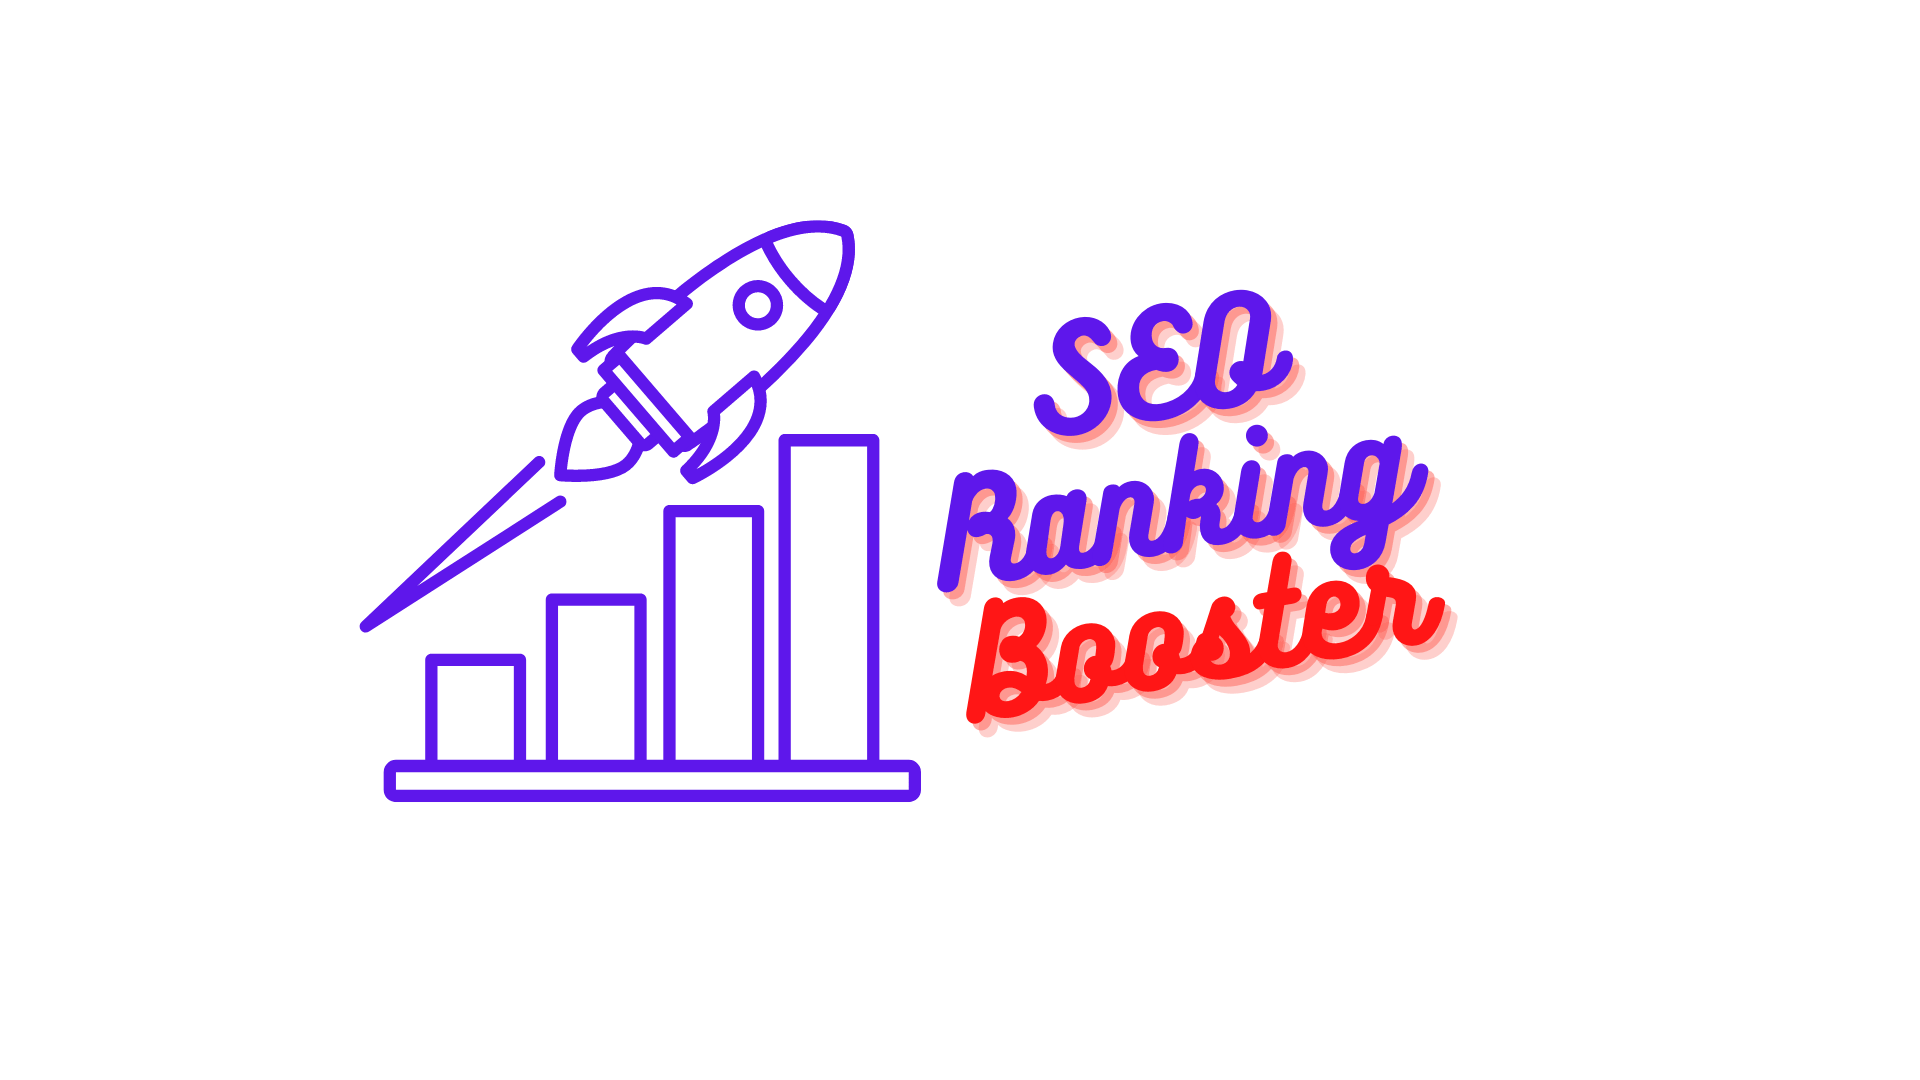 Social media is SEO ranking booster